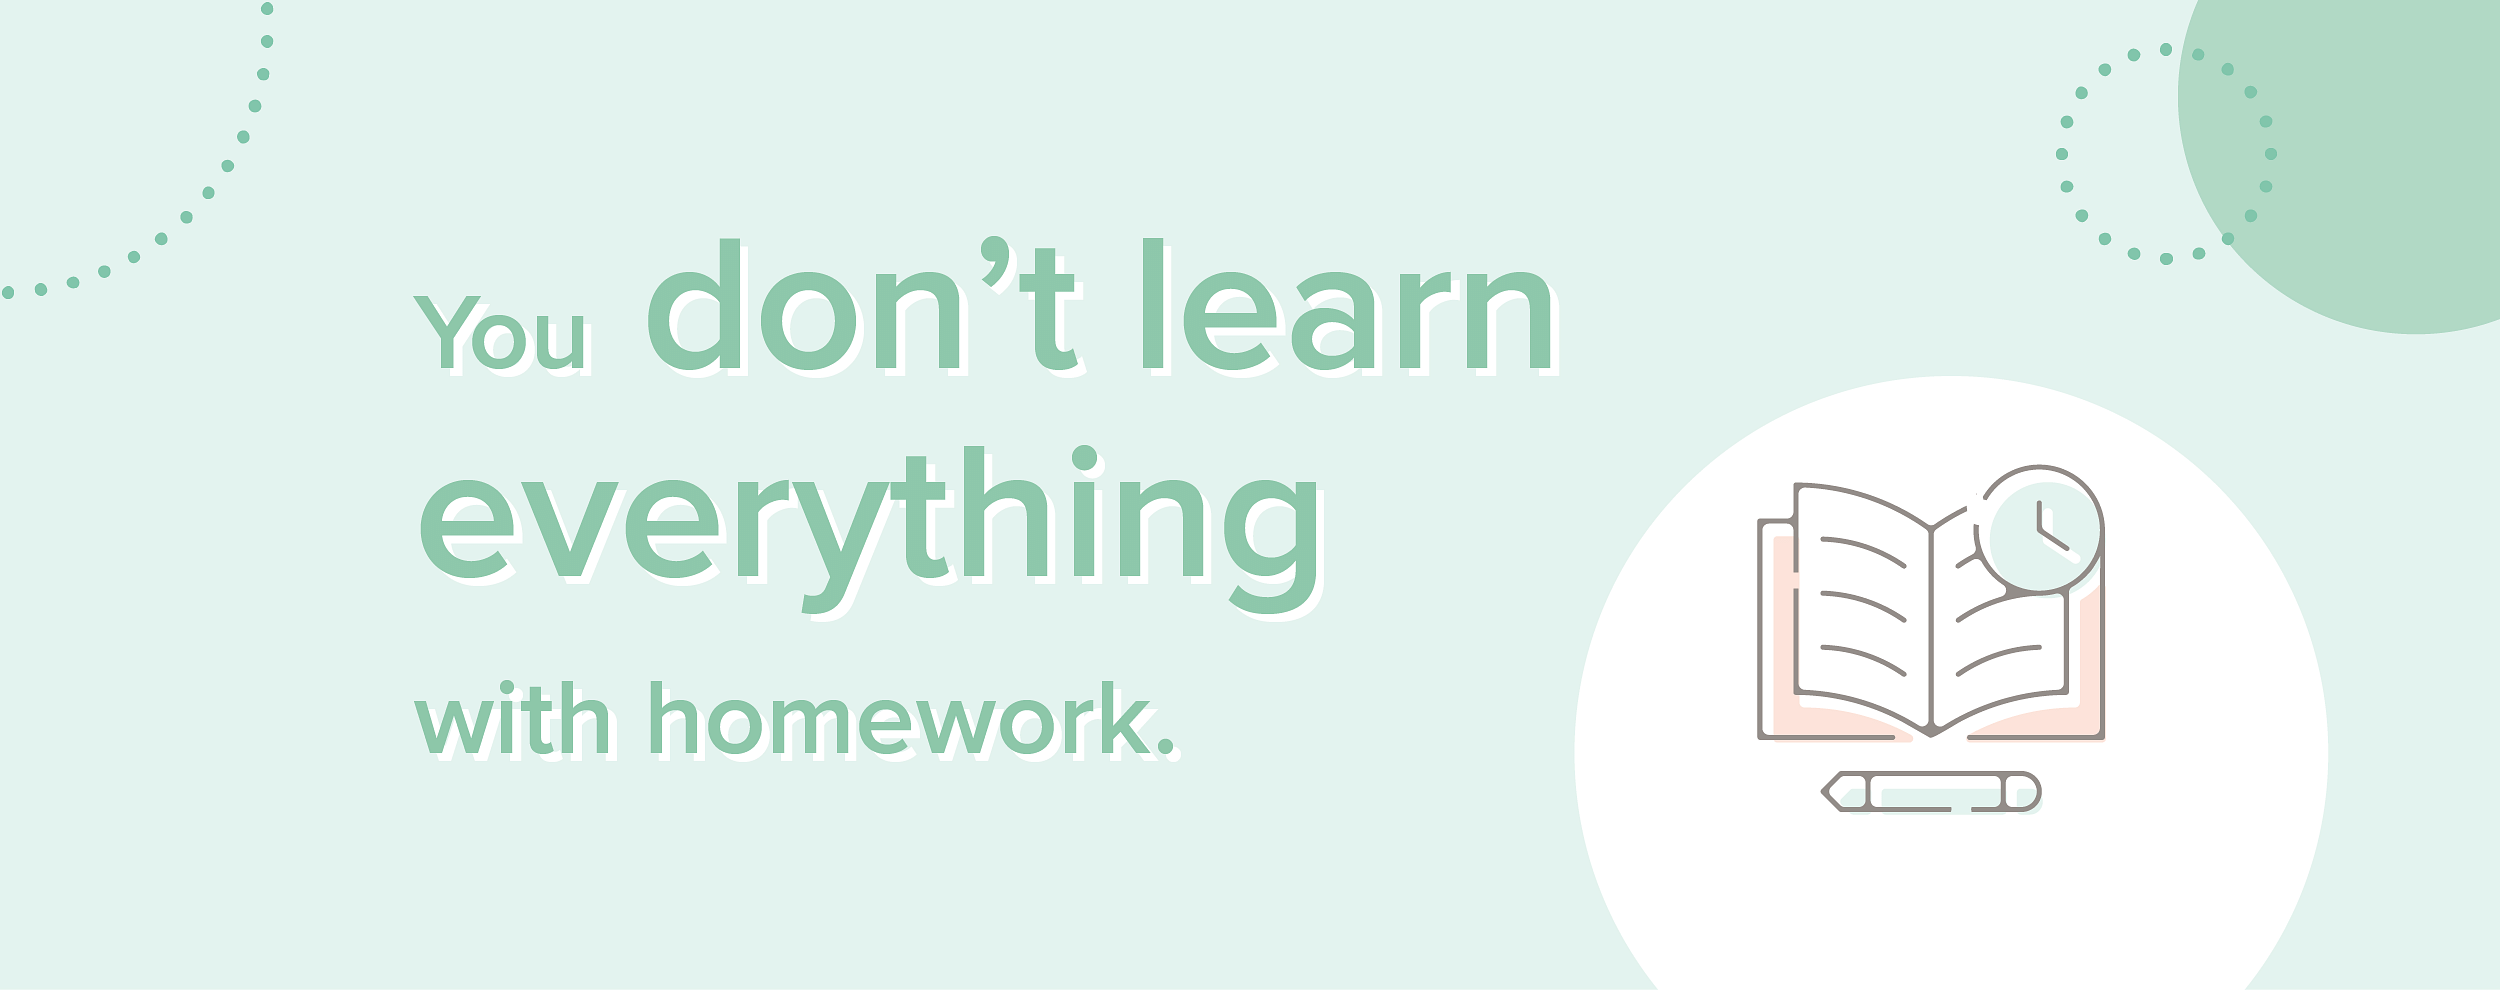 Homework is not enough